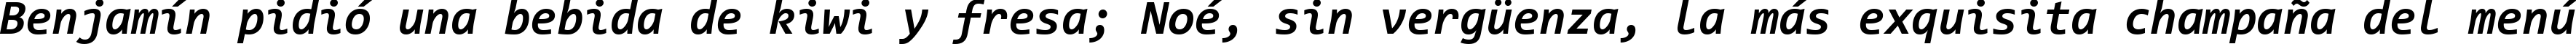 Пример написания шрифтом Consolas Bold Italic текста на испанском